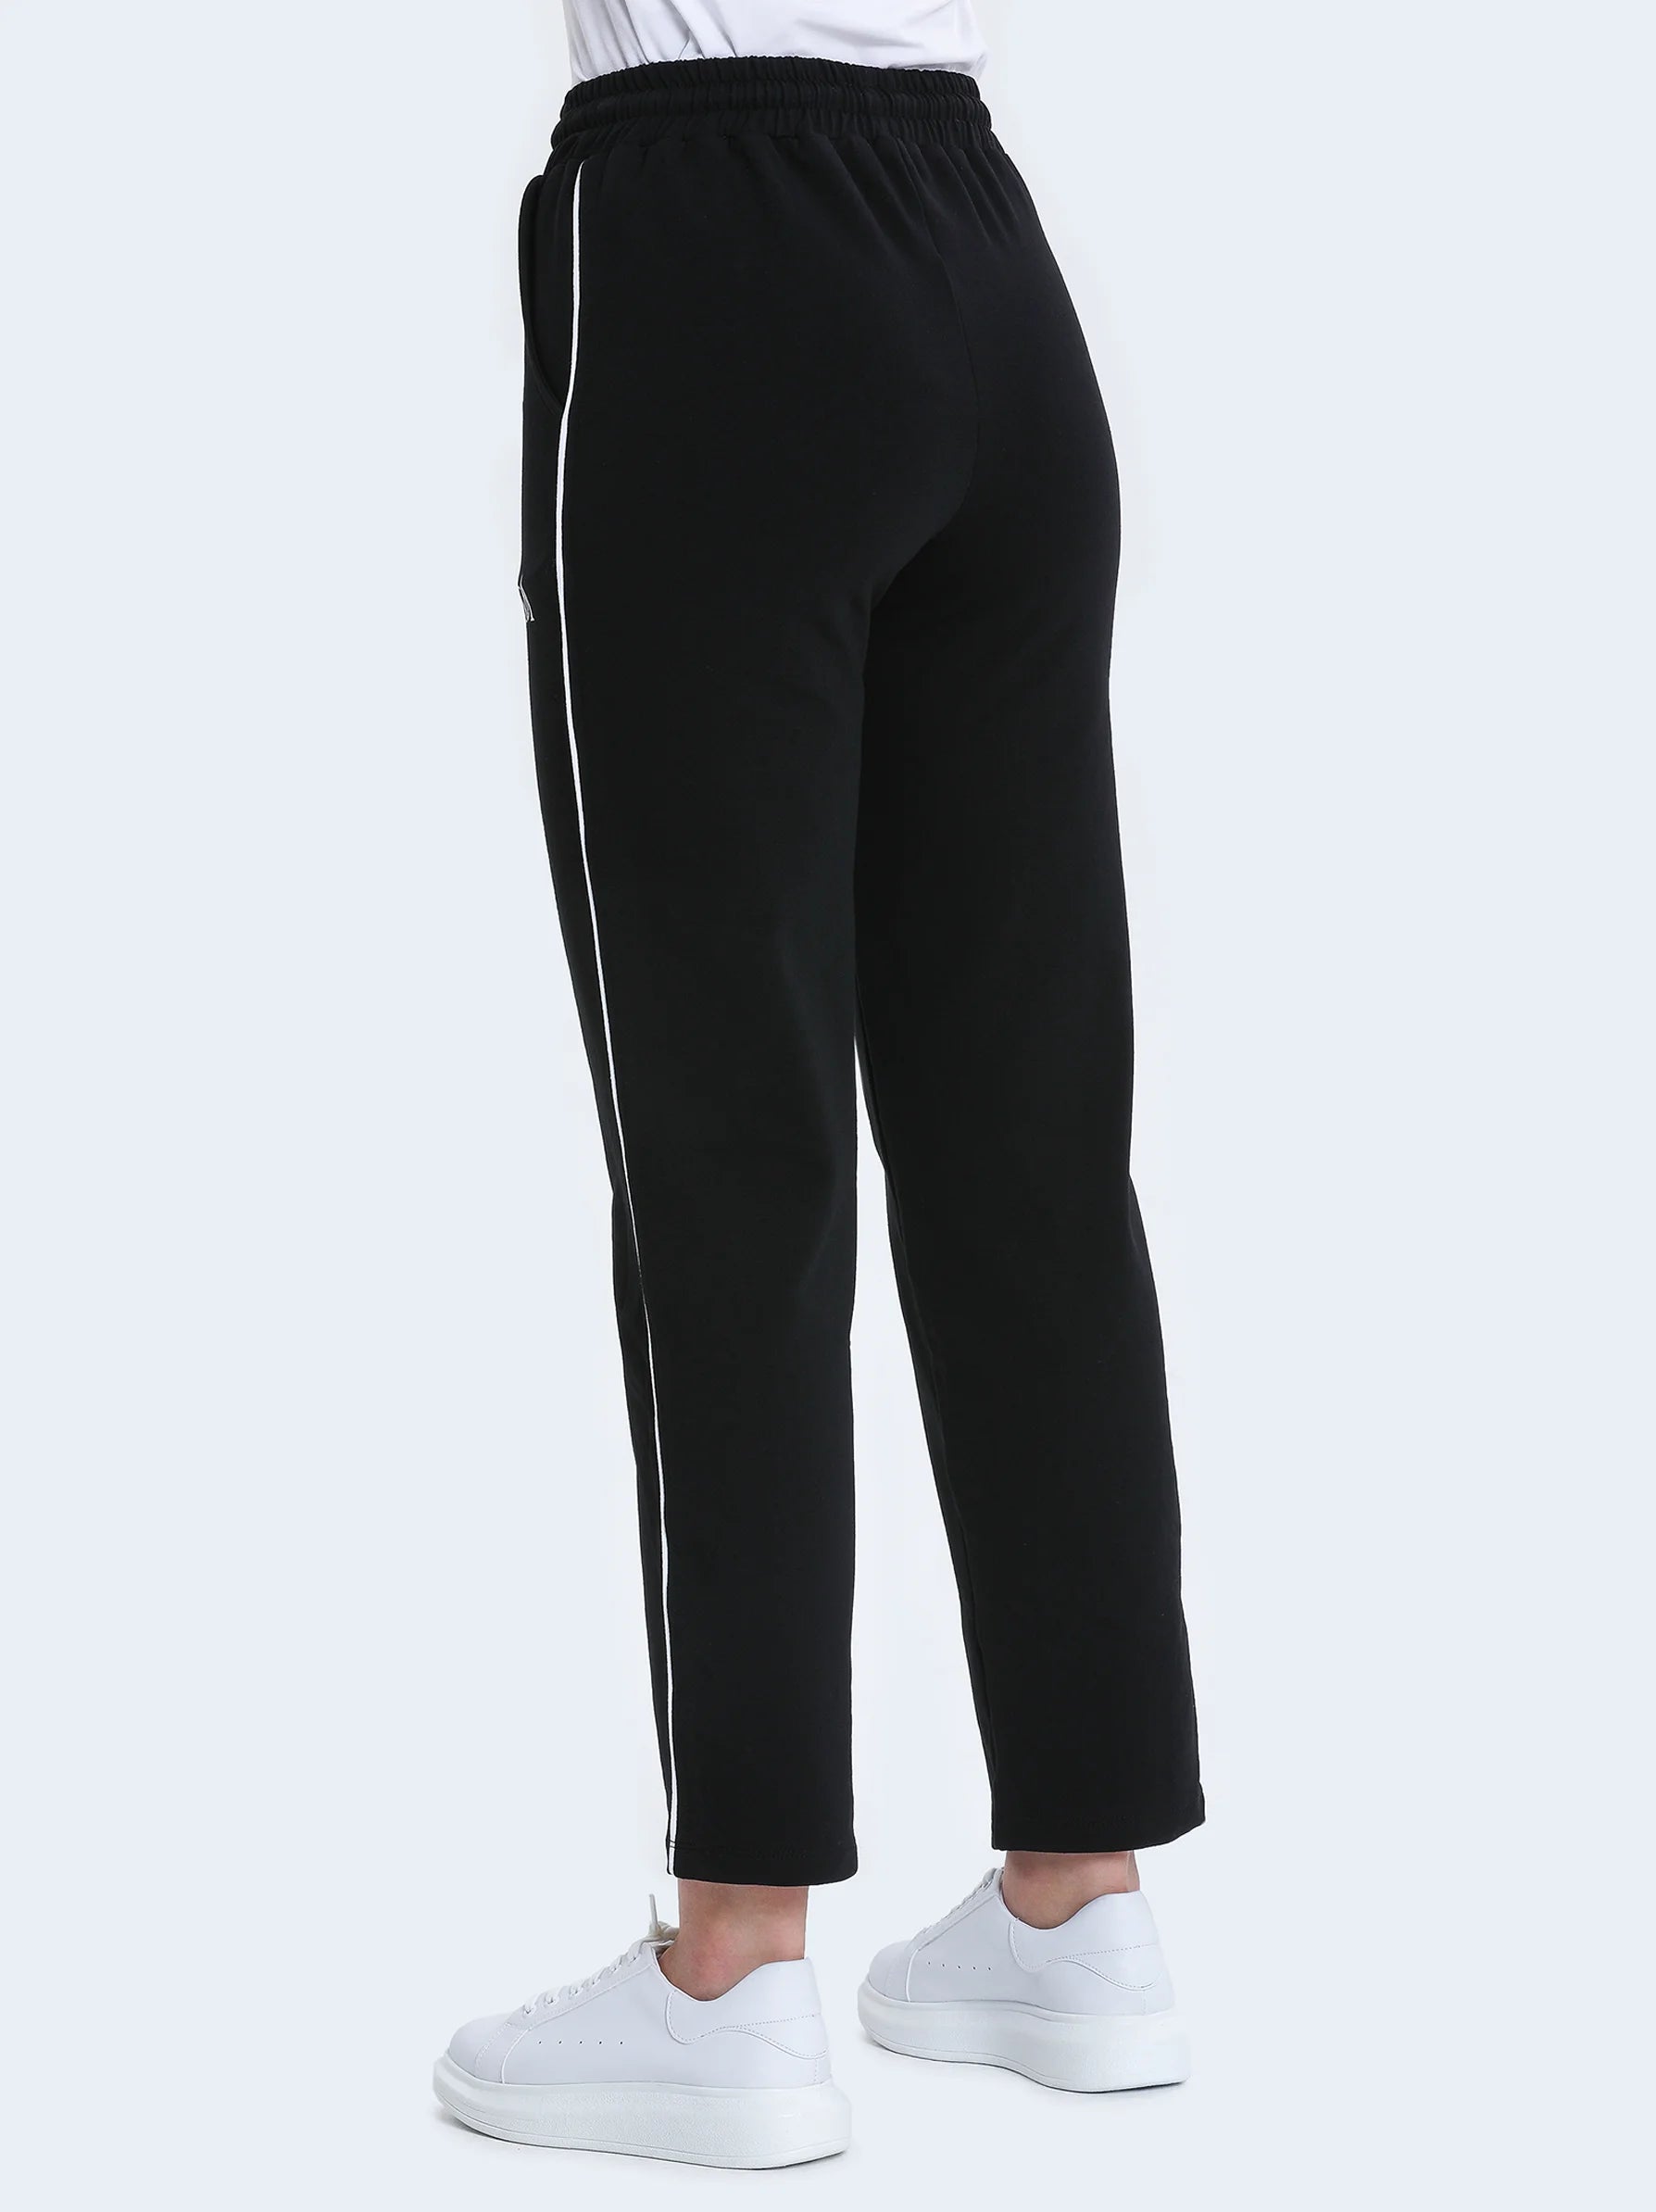 Black Sweatpant for Women with Pockets - Cotton Sweatpants – Modora UK